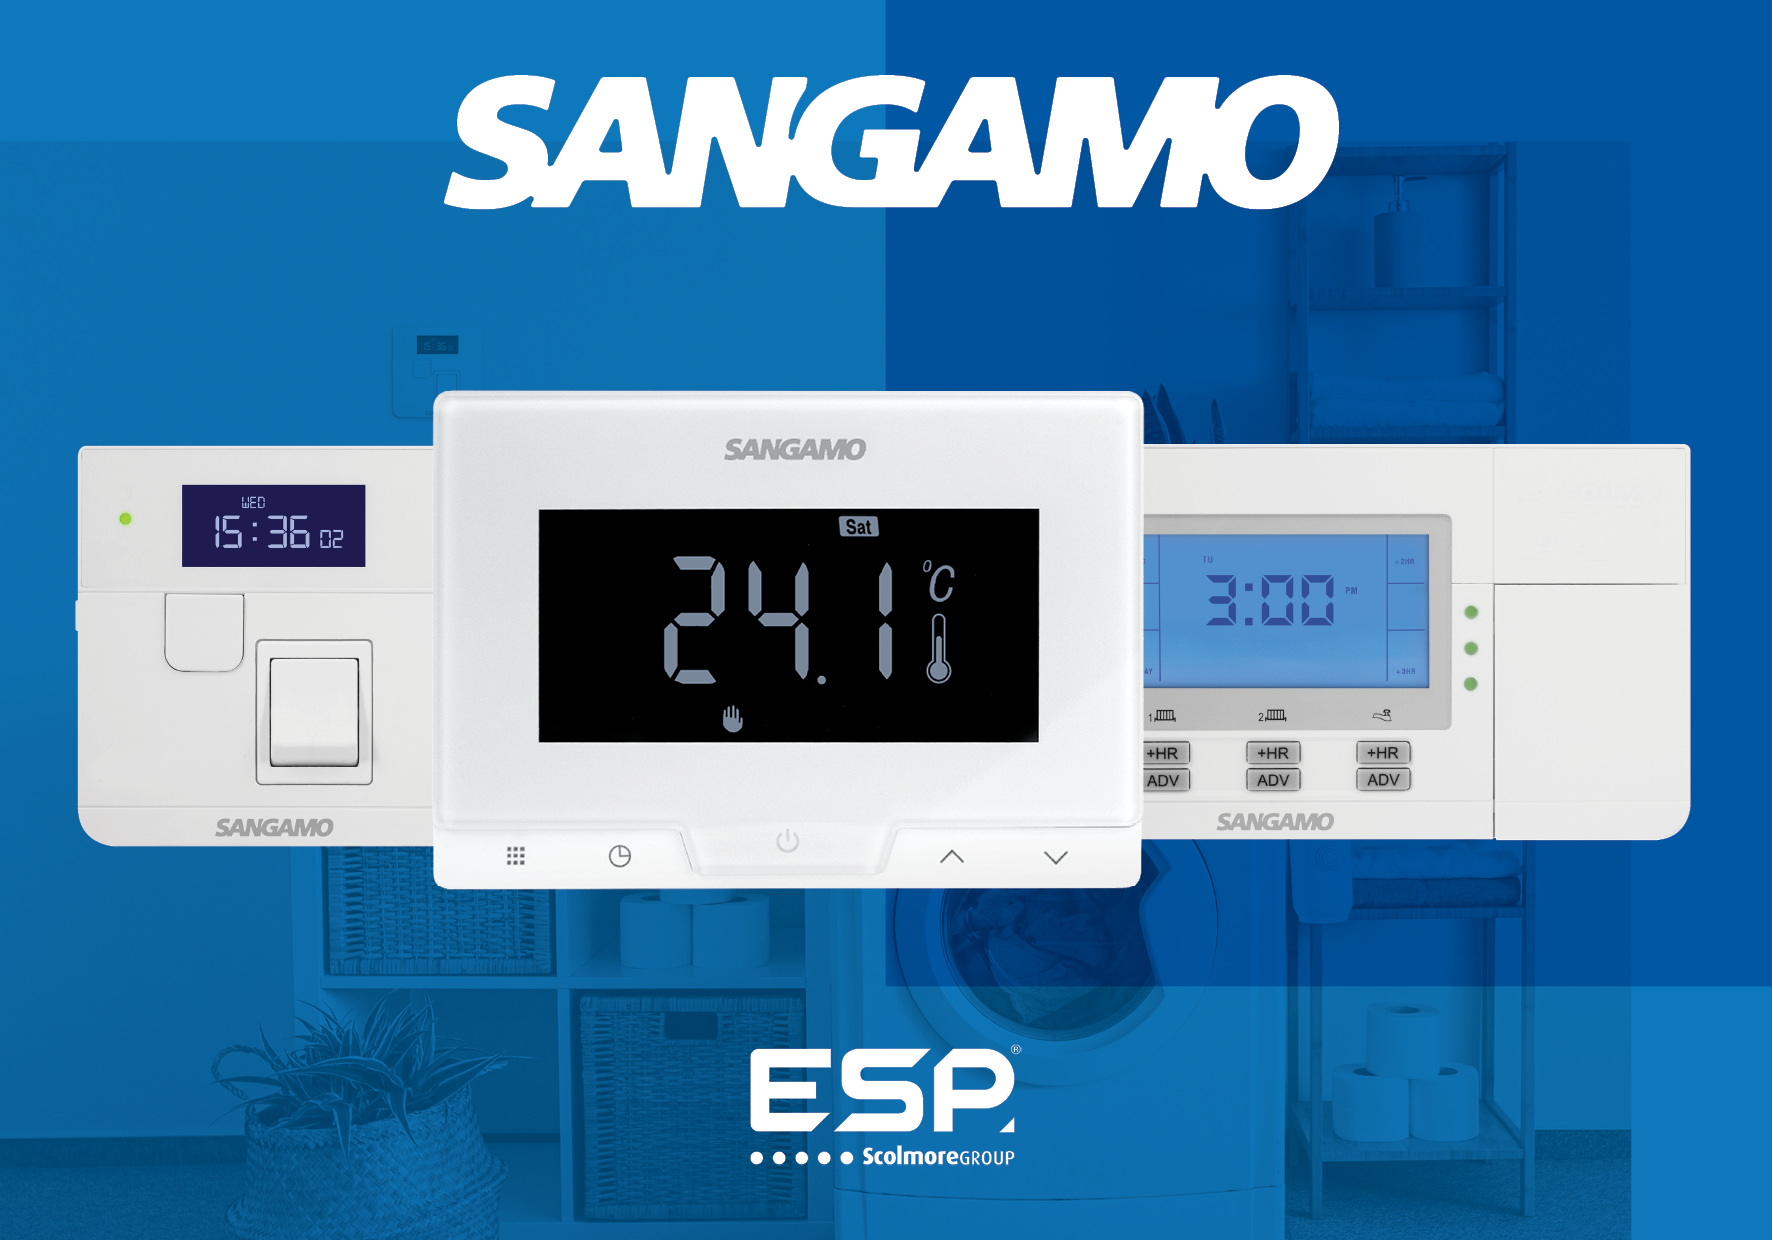 WIN a Sangamo product bundle courtesy of ESP!